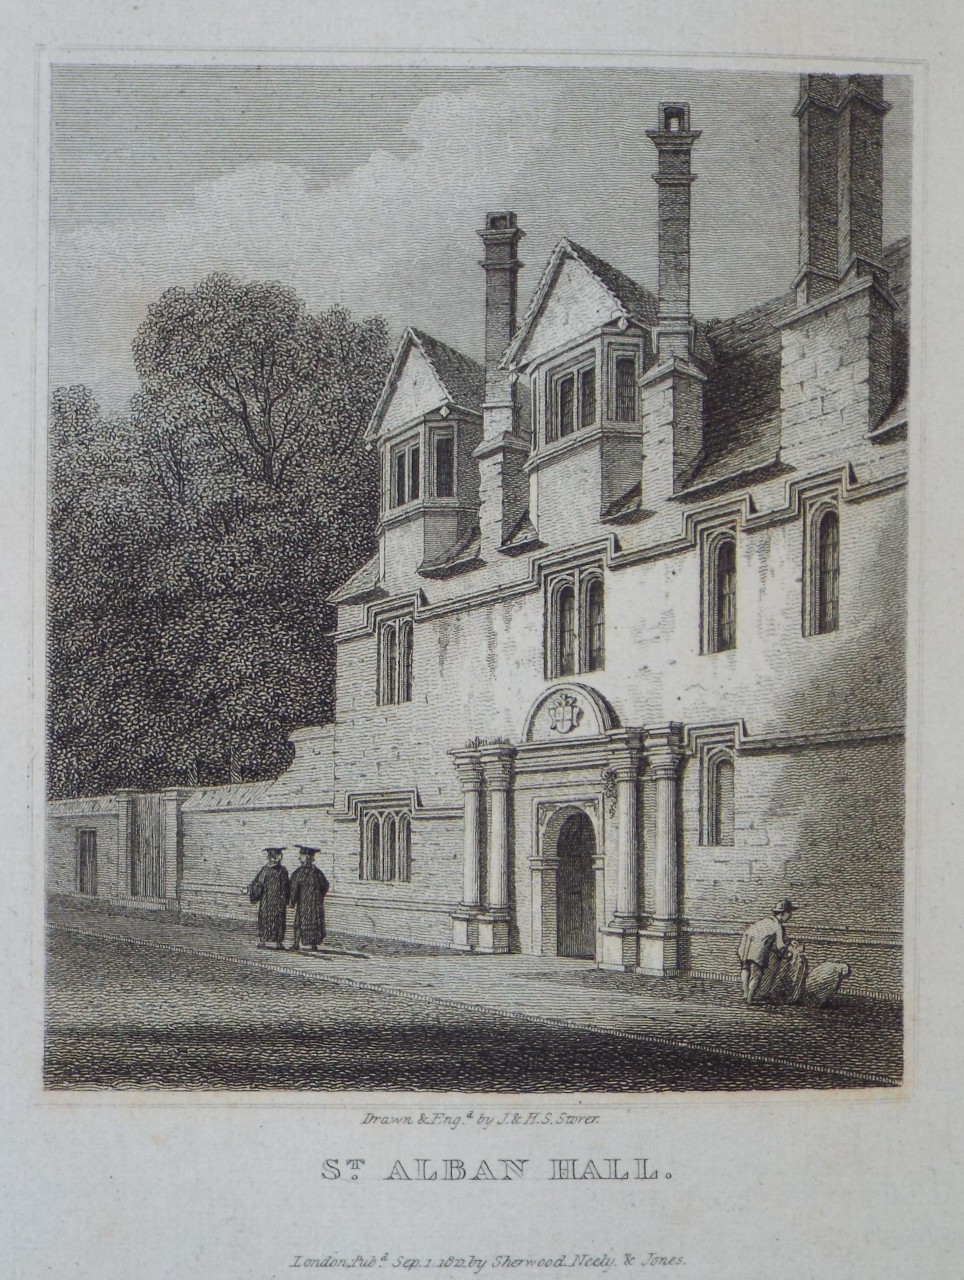 Print - St. Alban Hall. - Storer